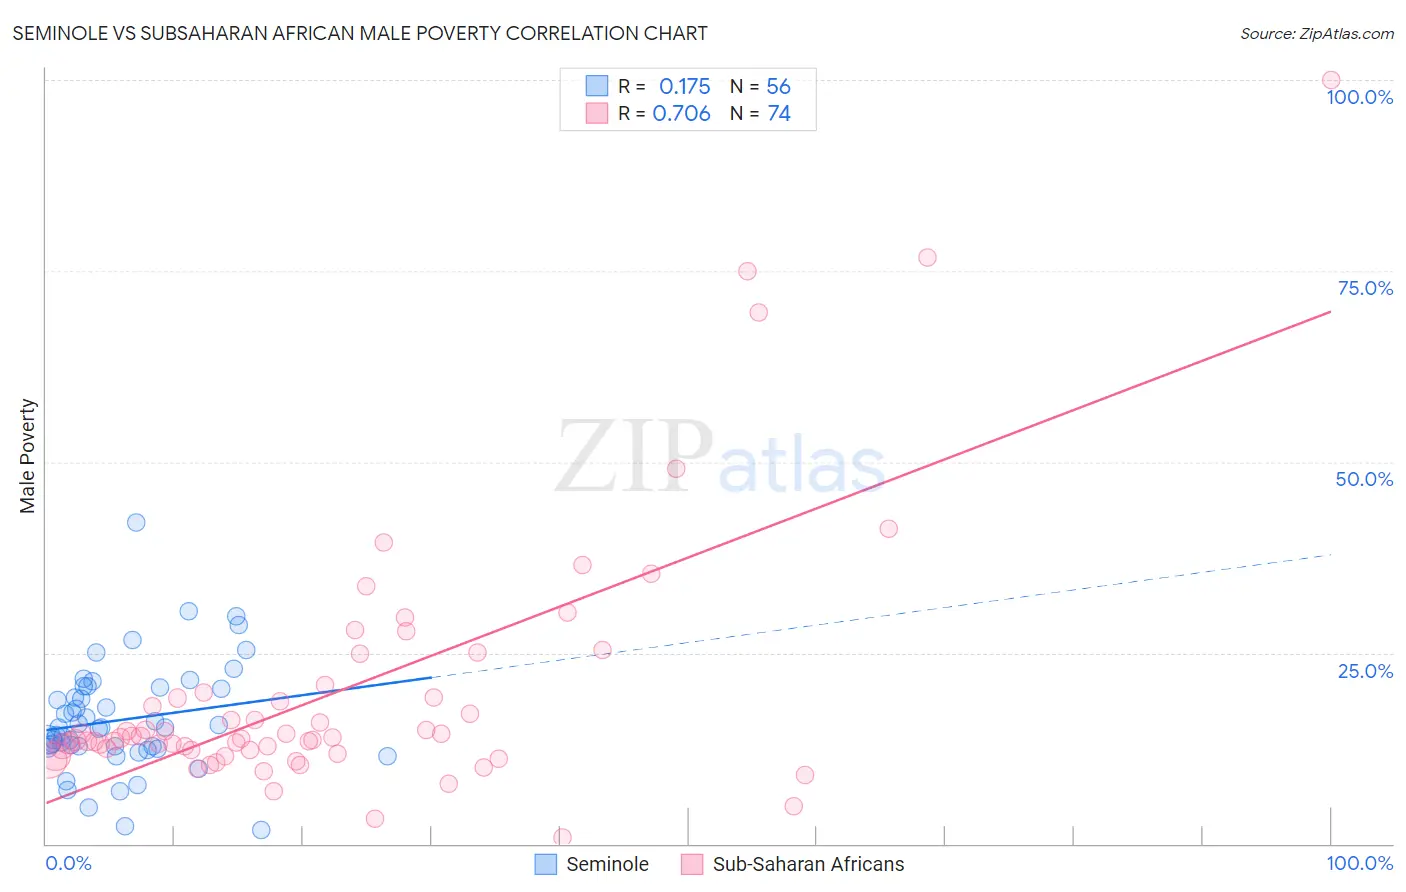 Seminole vs Subsaharan African Male Poverty